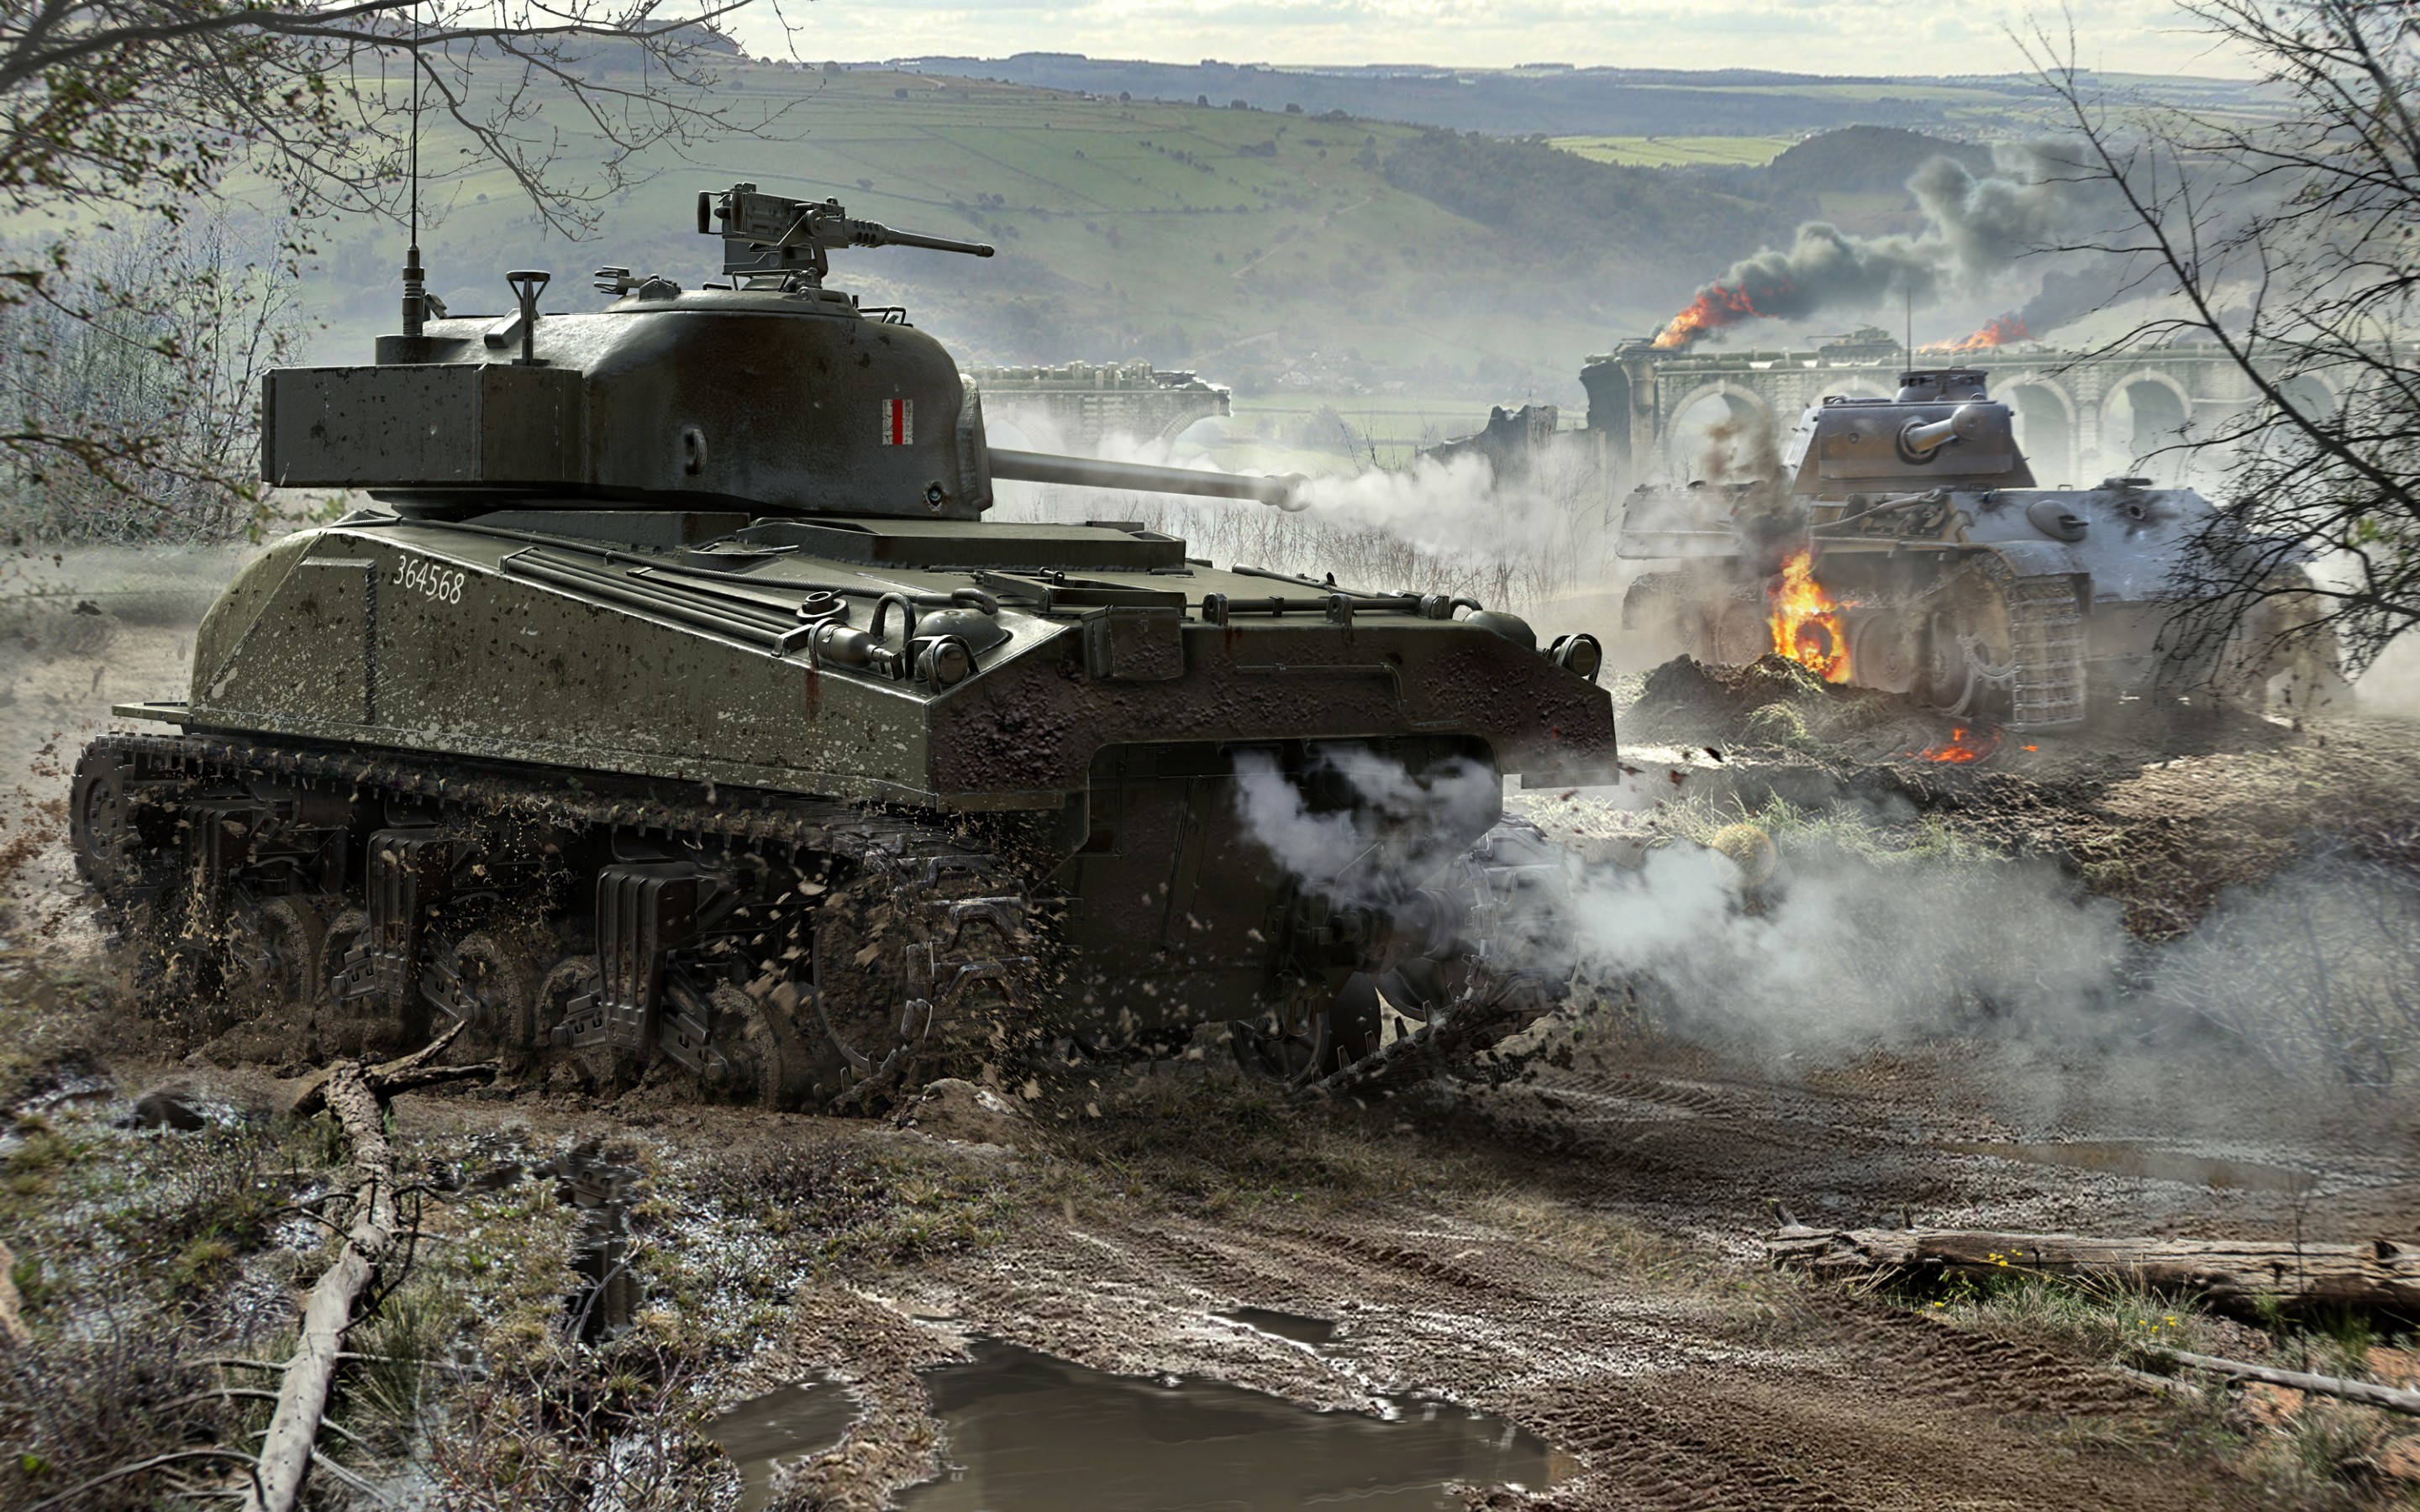 world of tanks wallpaper 1920x1080,tank,combat vehicle,vehicle,churchill tank,military vehicle